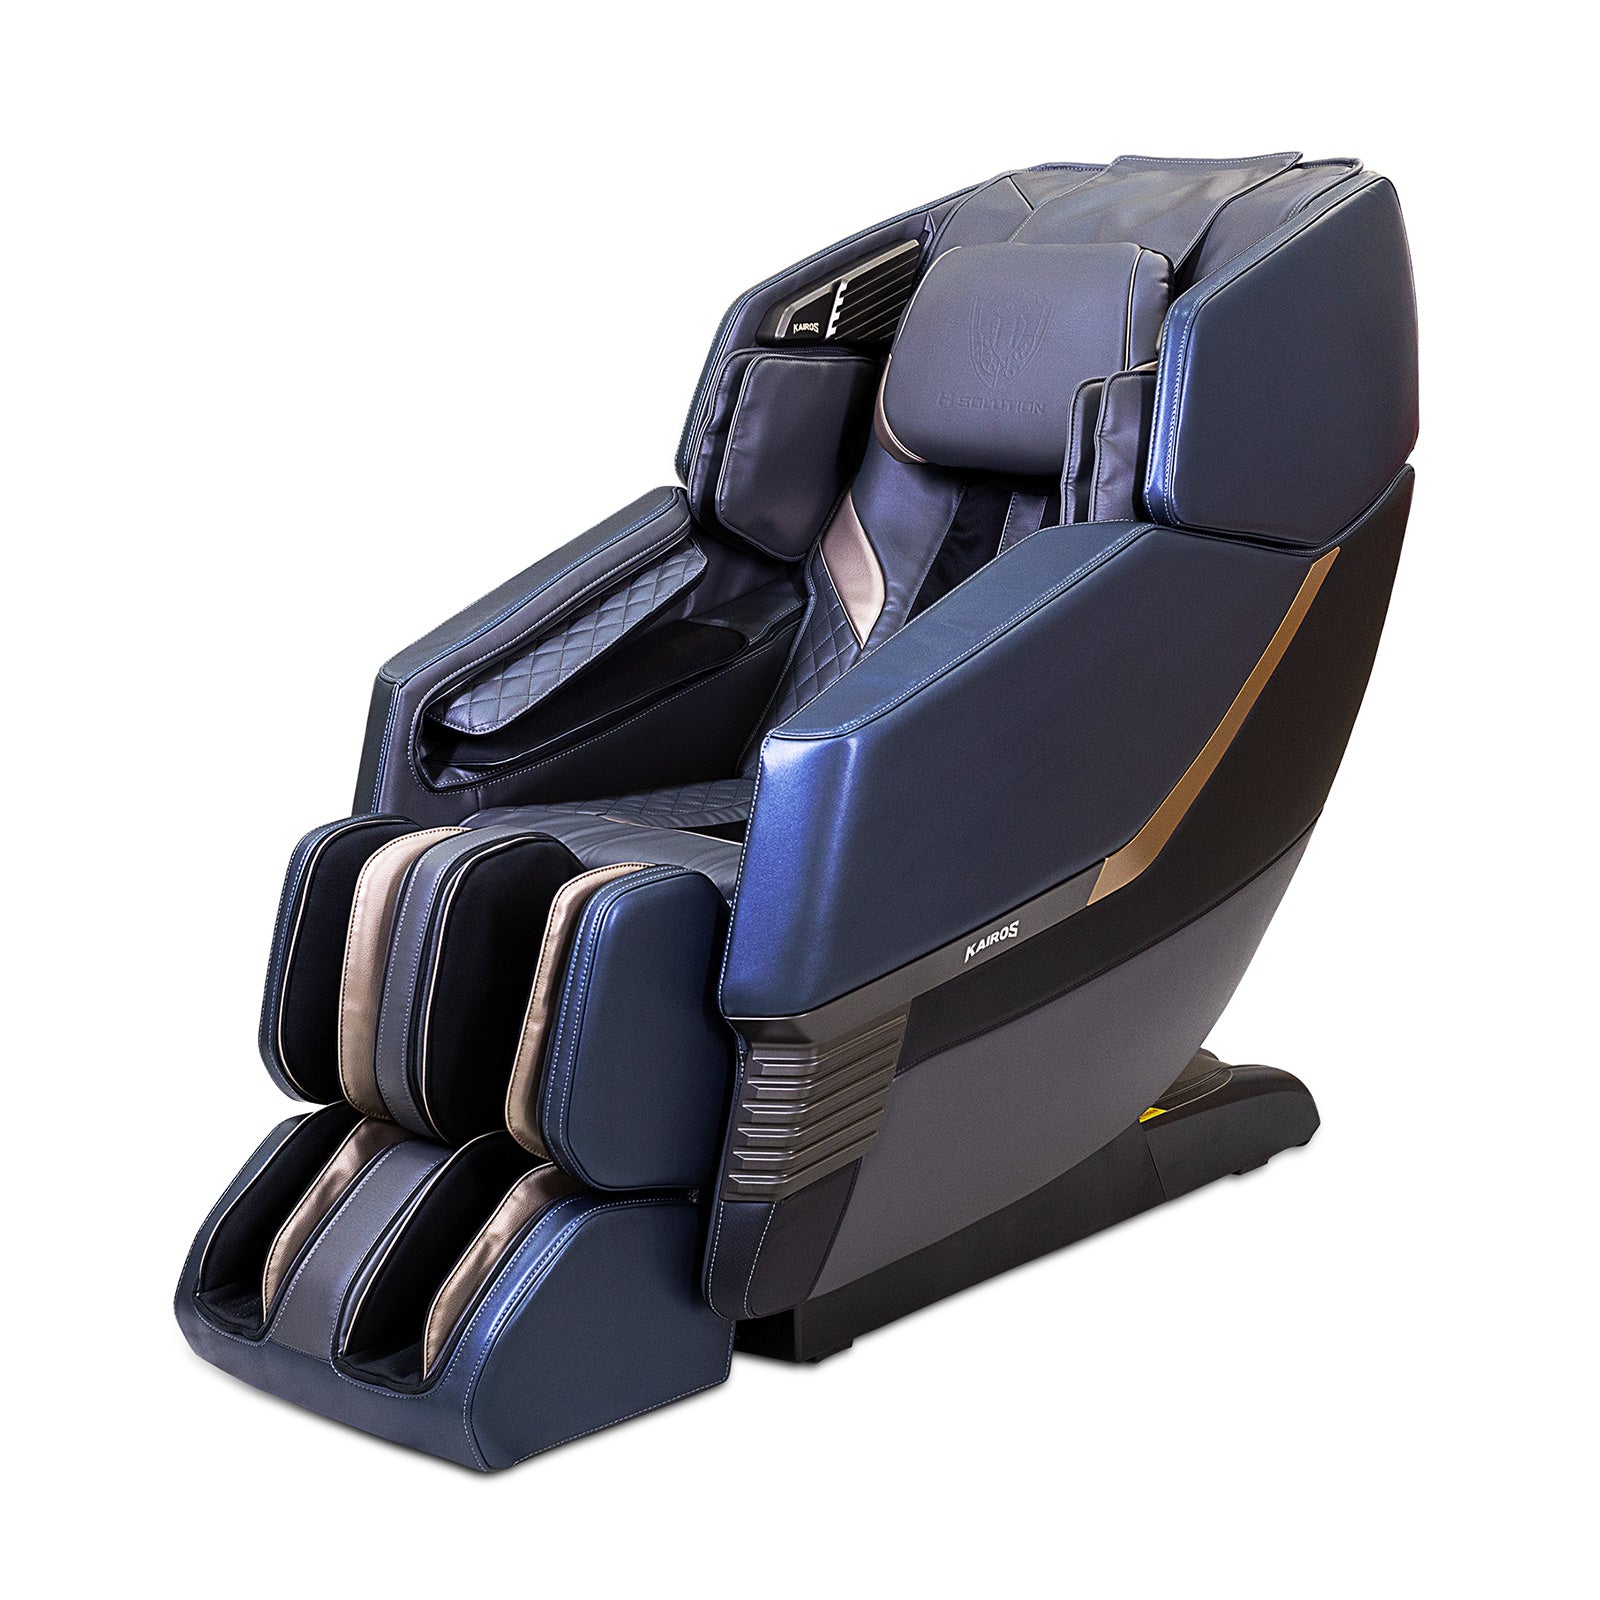 H Solution KAIROS Massage Chair (Ocean Blue)